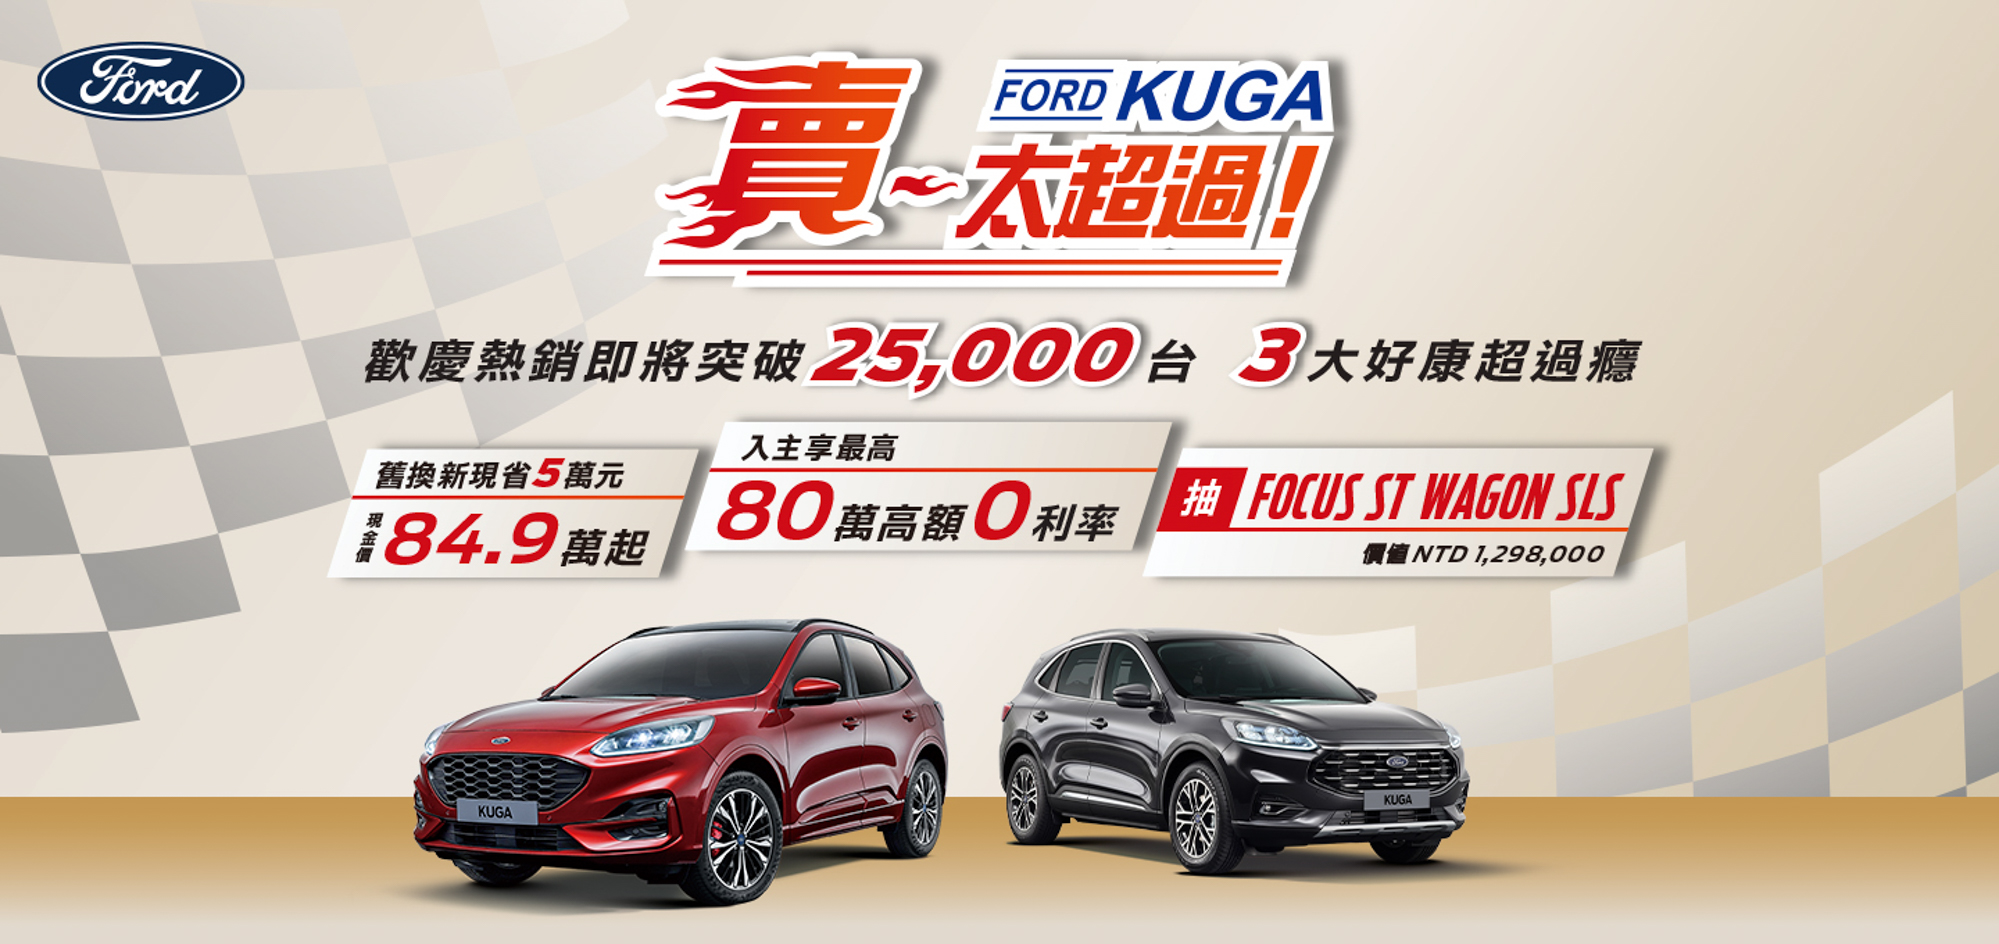 Ford Kuga 與 Focus 推新優惠！舊換新現金價探新低